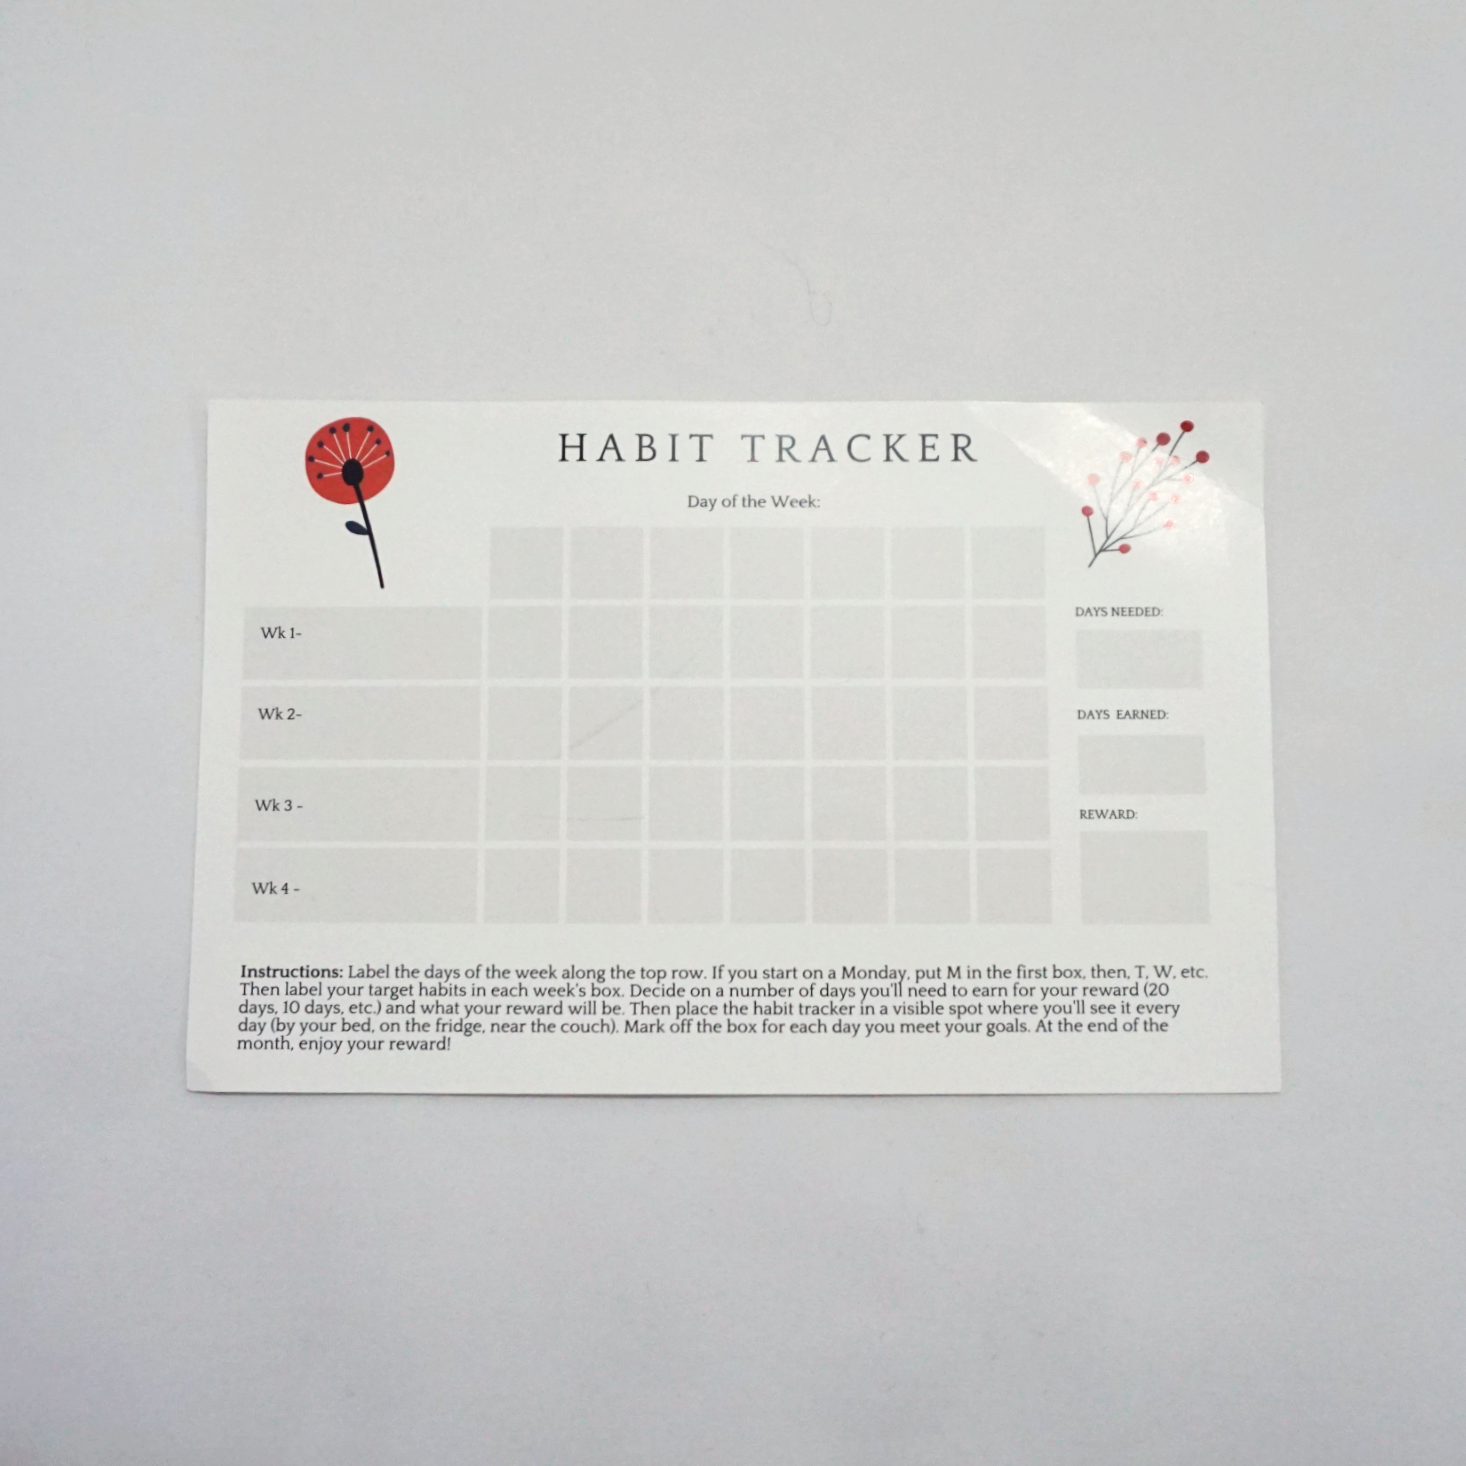 MindWander January 2020 habit tracker card